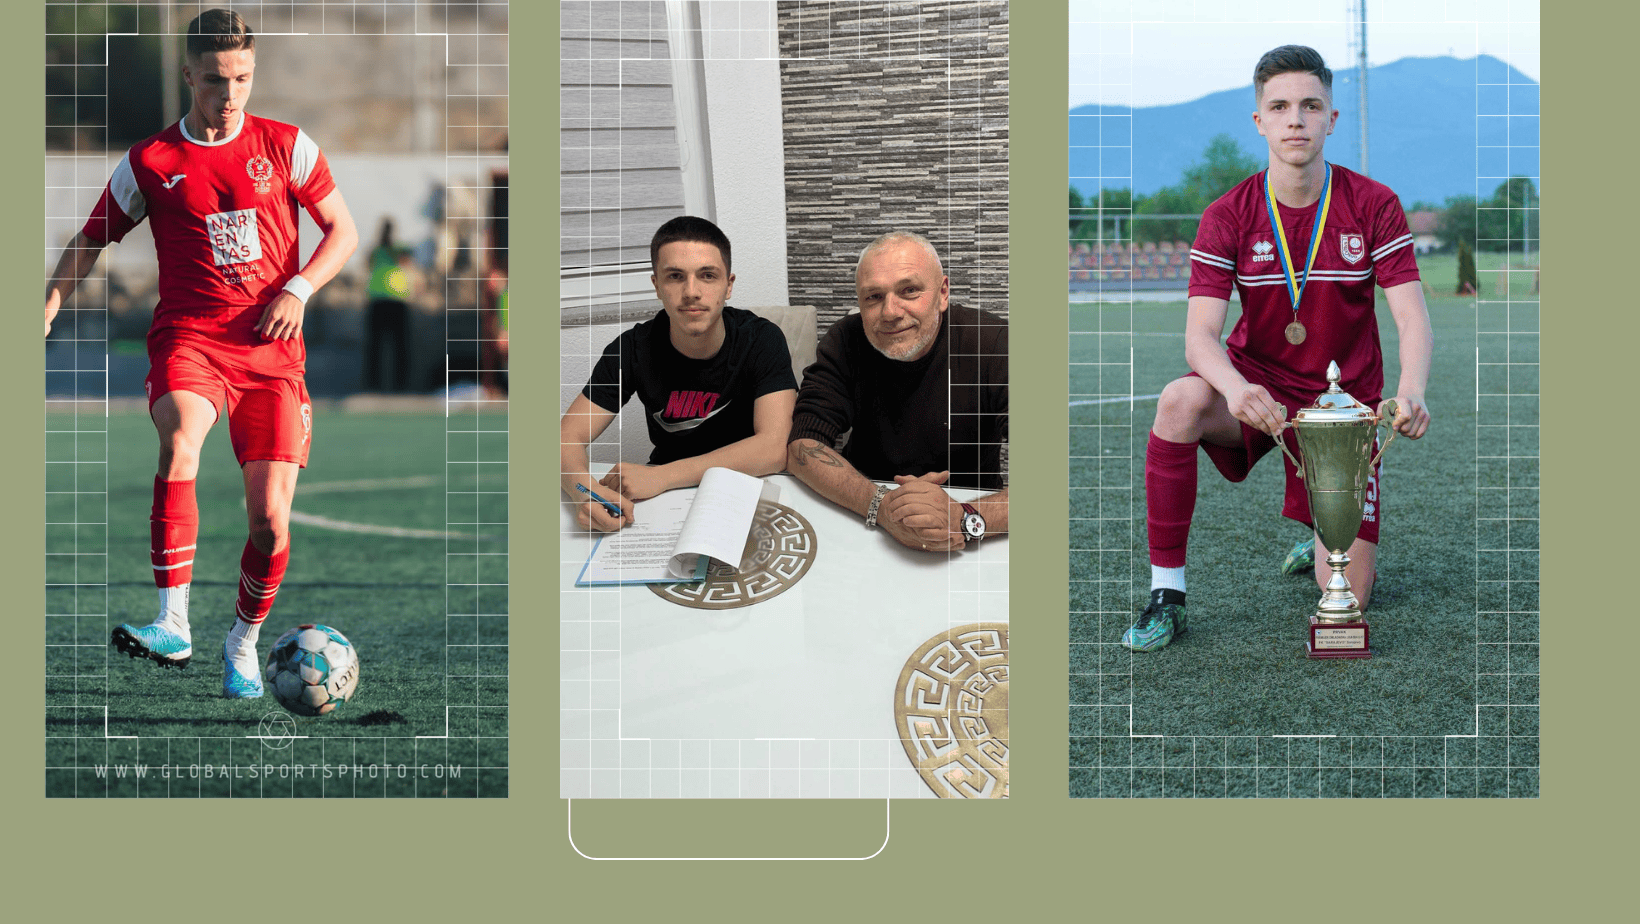 Kladuščanin Faris Babić potpisao ugovor sa Soccer sport “Zuka”, njemačkom agencijom